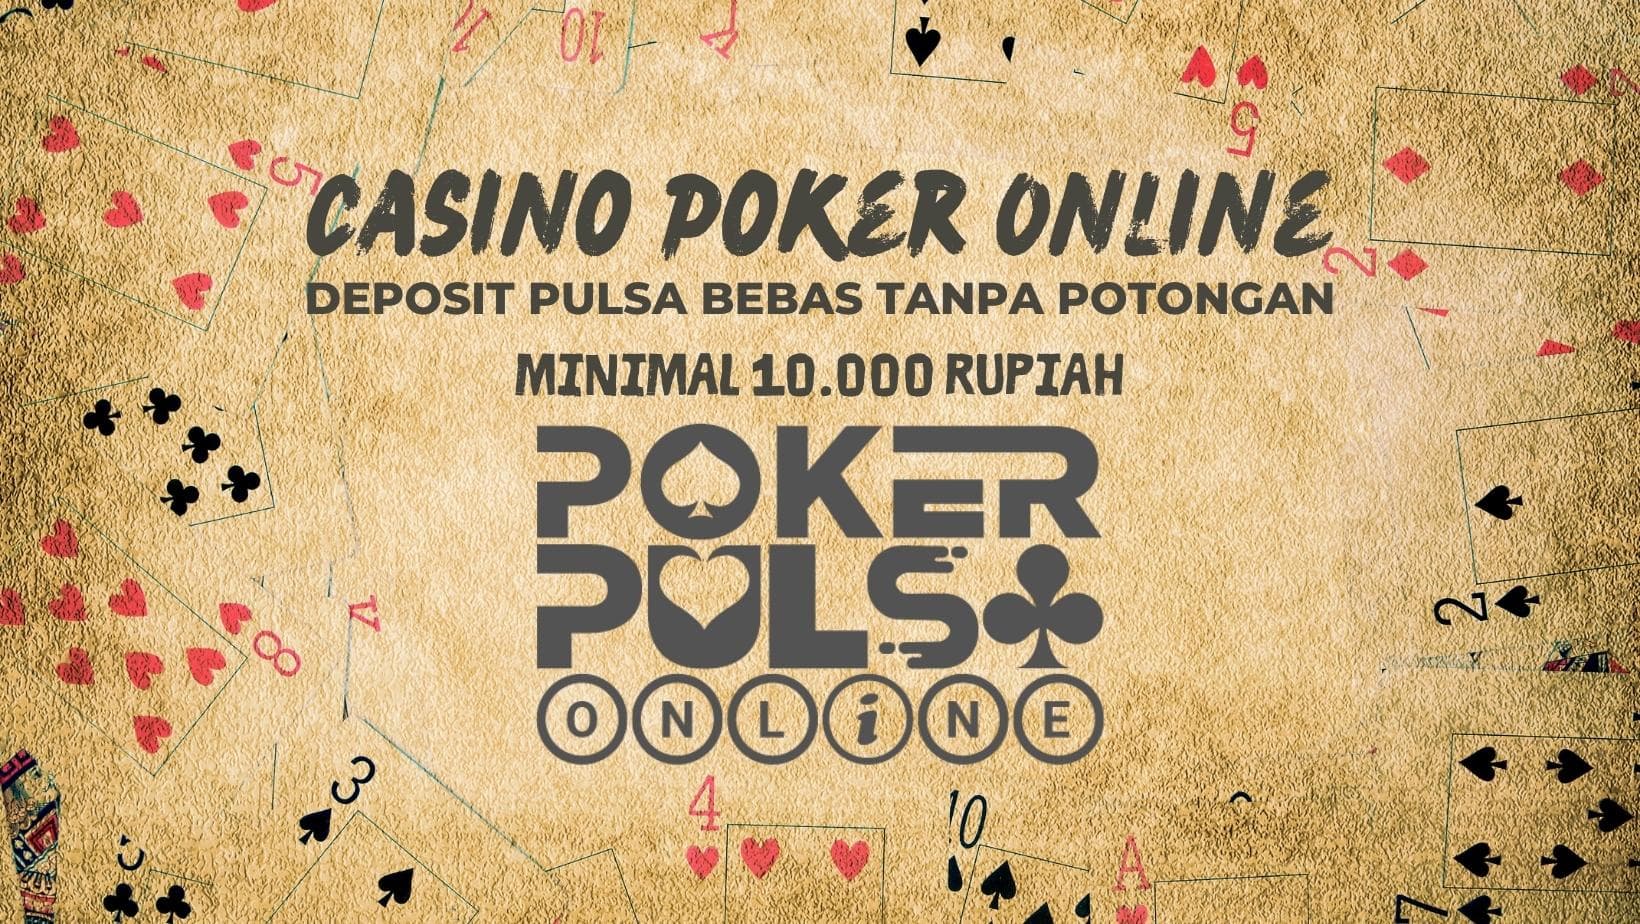 casino-poker-online.jpeg?83608183c858062cb861d670fb9c0c15